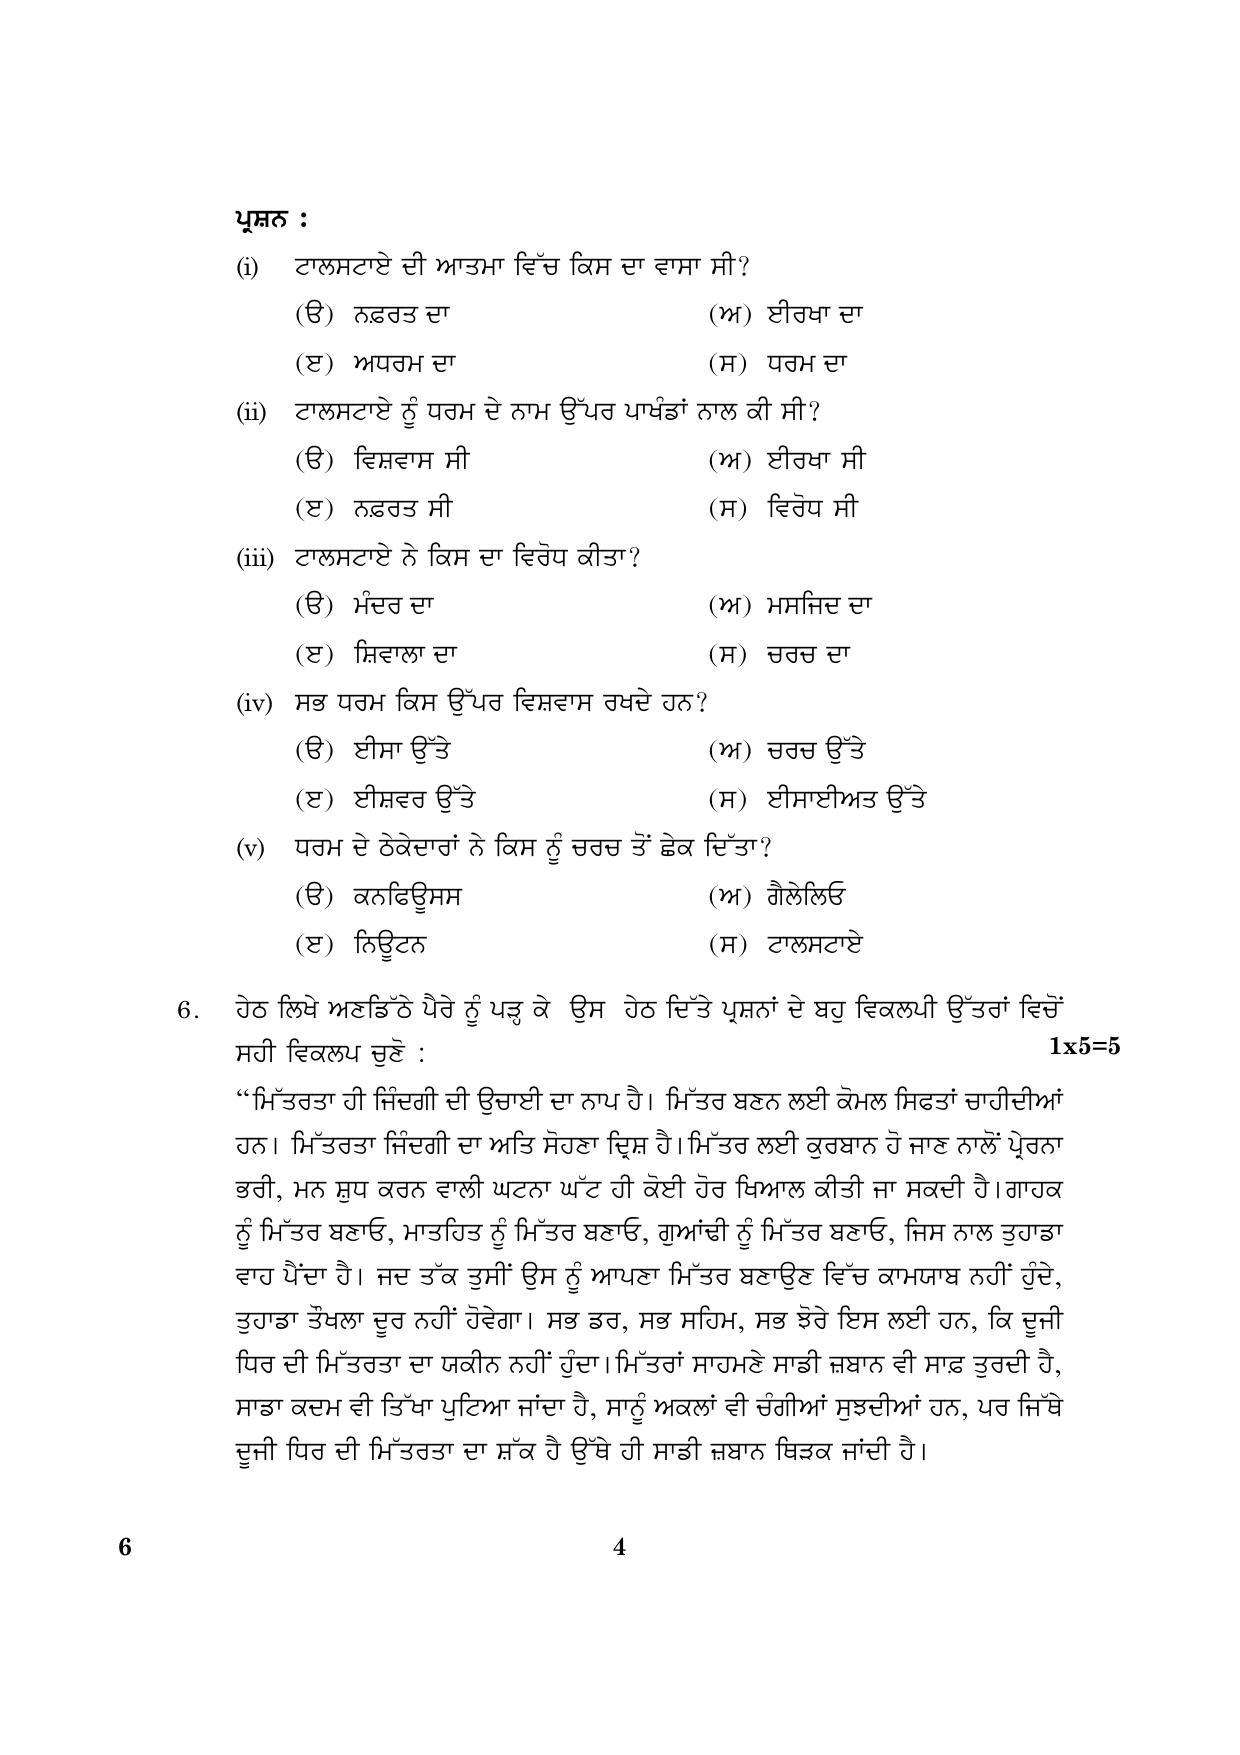 CBSE Class 10 006 Punjabi 2016 Question Paper - Page 4